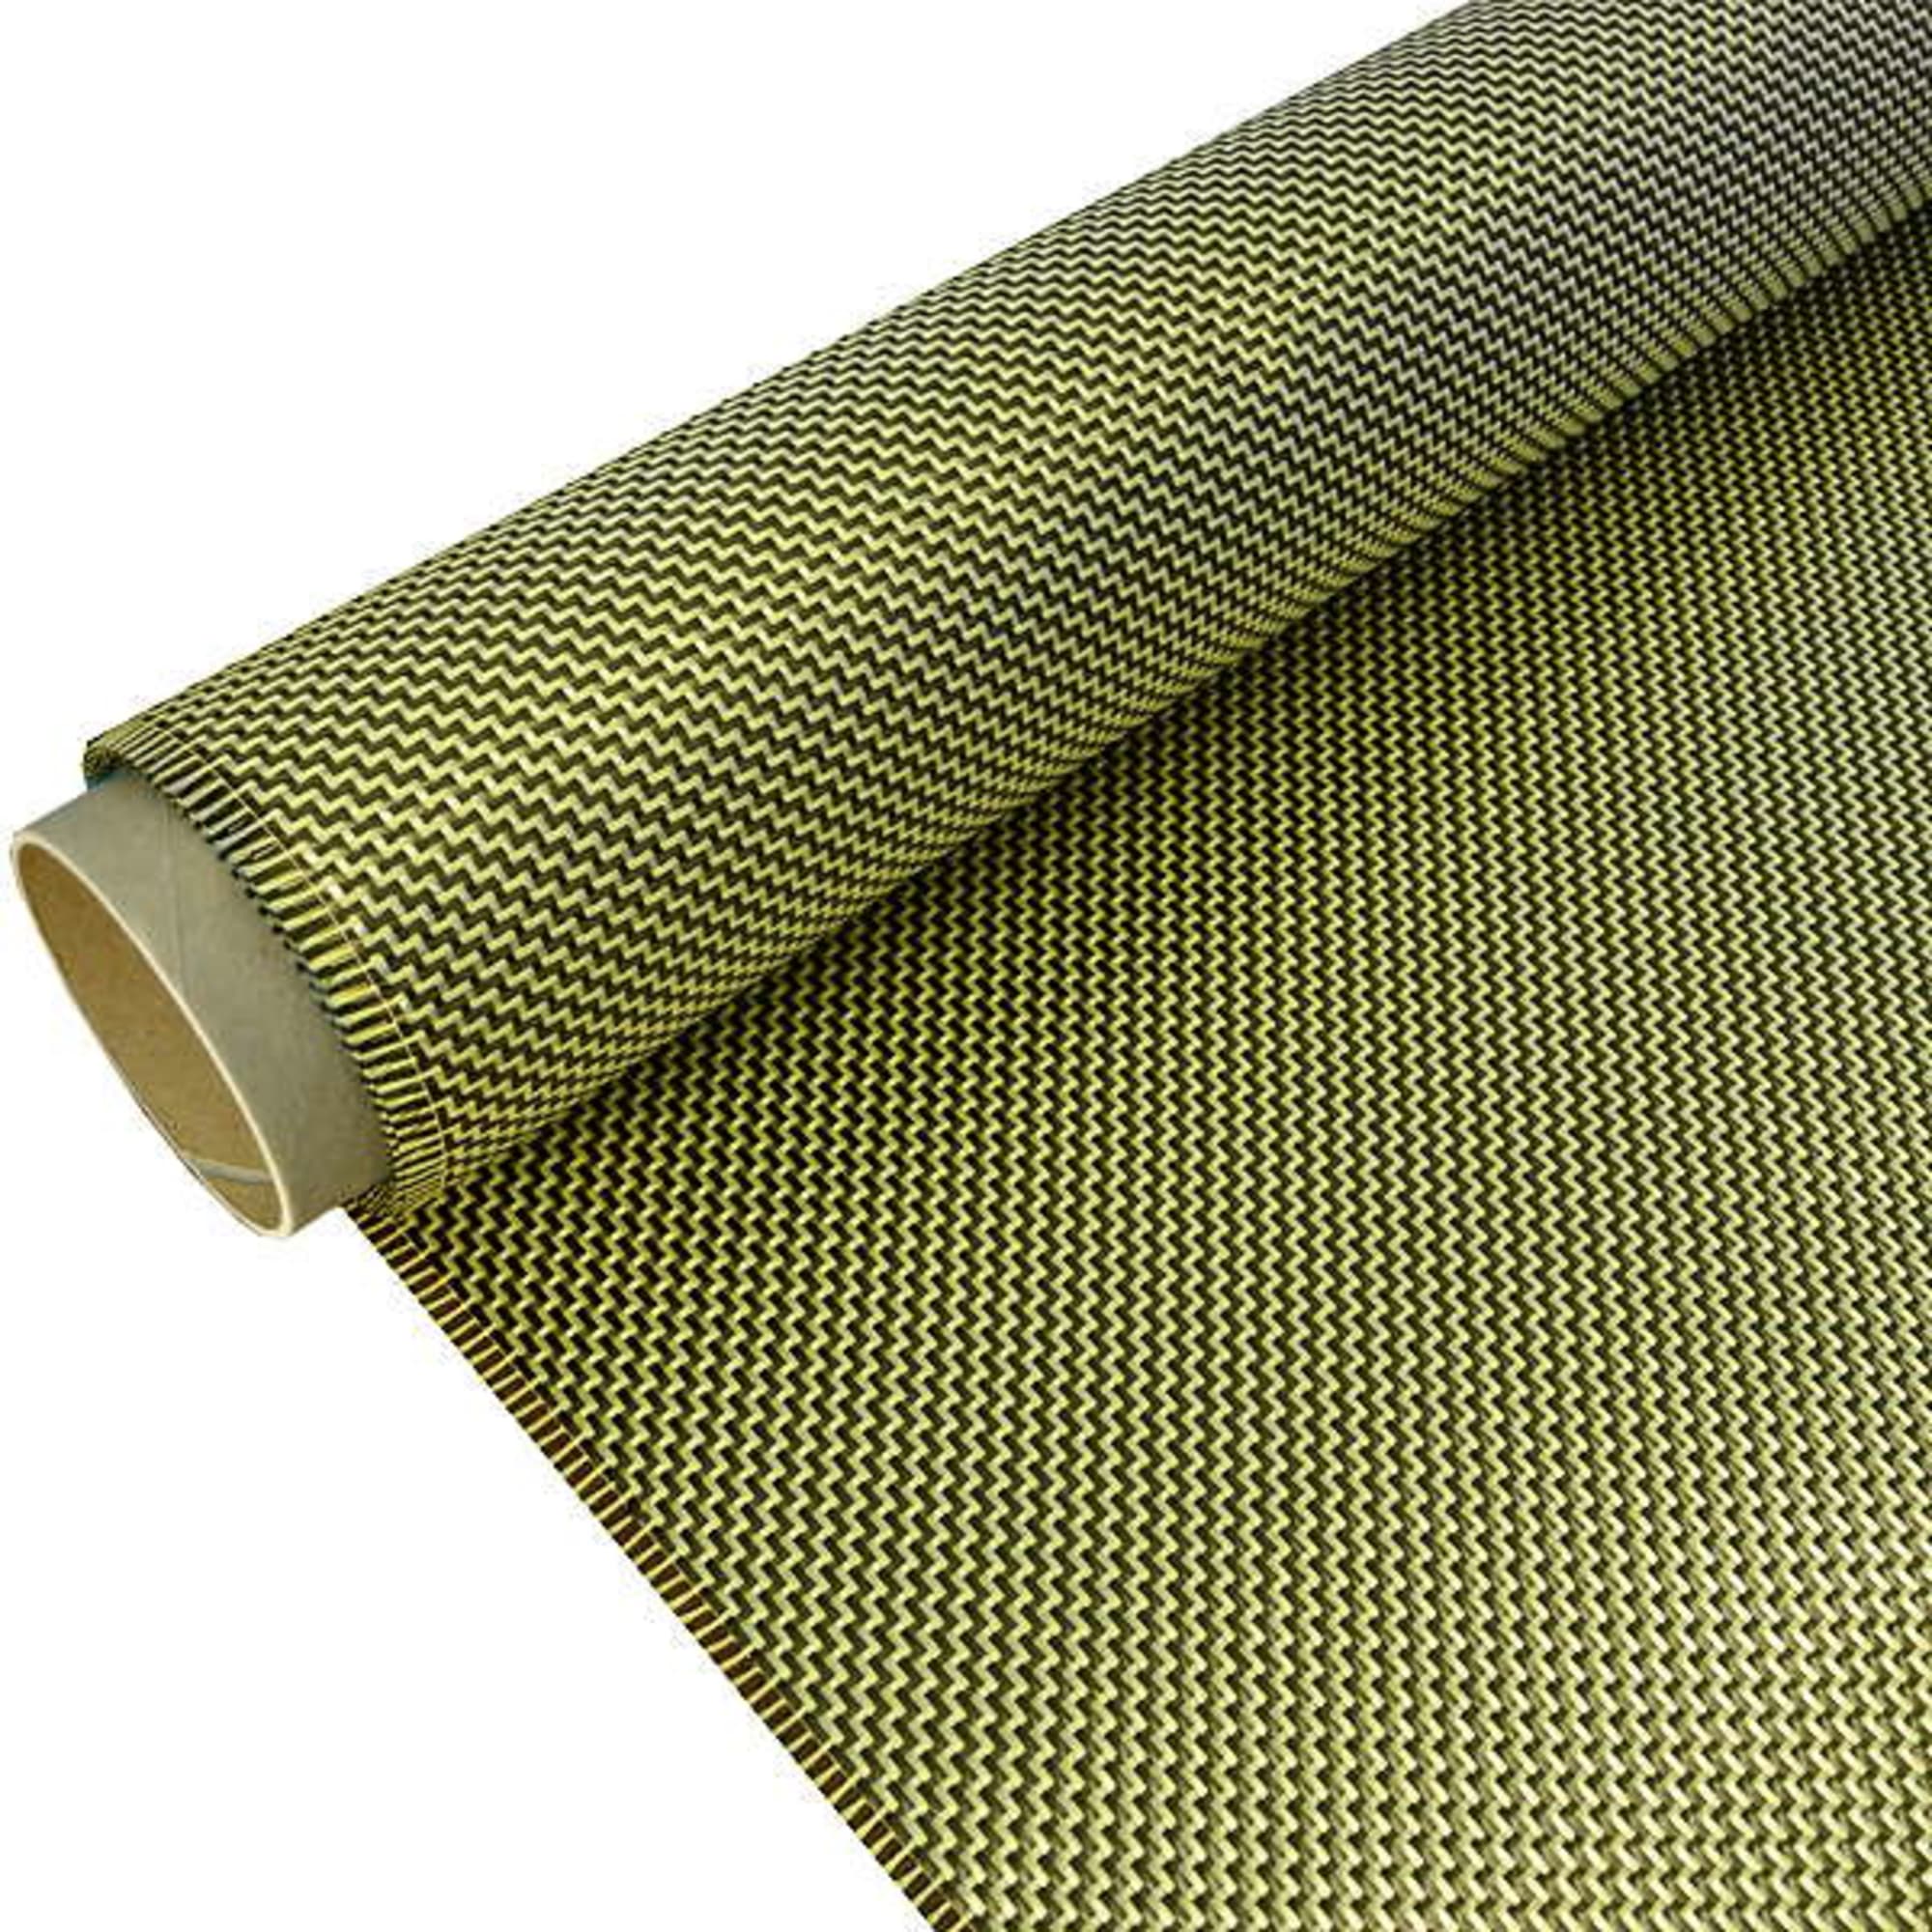 Carbon/Aramid fabric 205 g/m² (twill weave) 100 cm, image 2